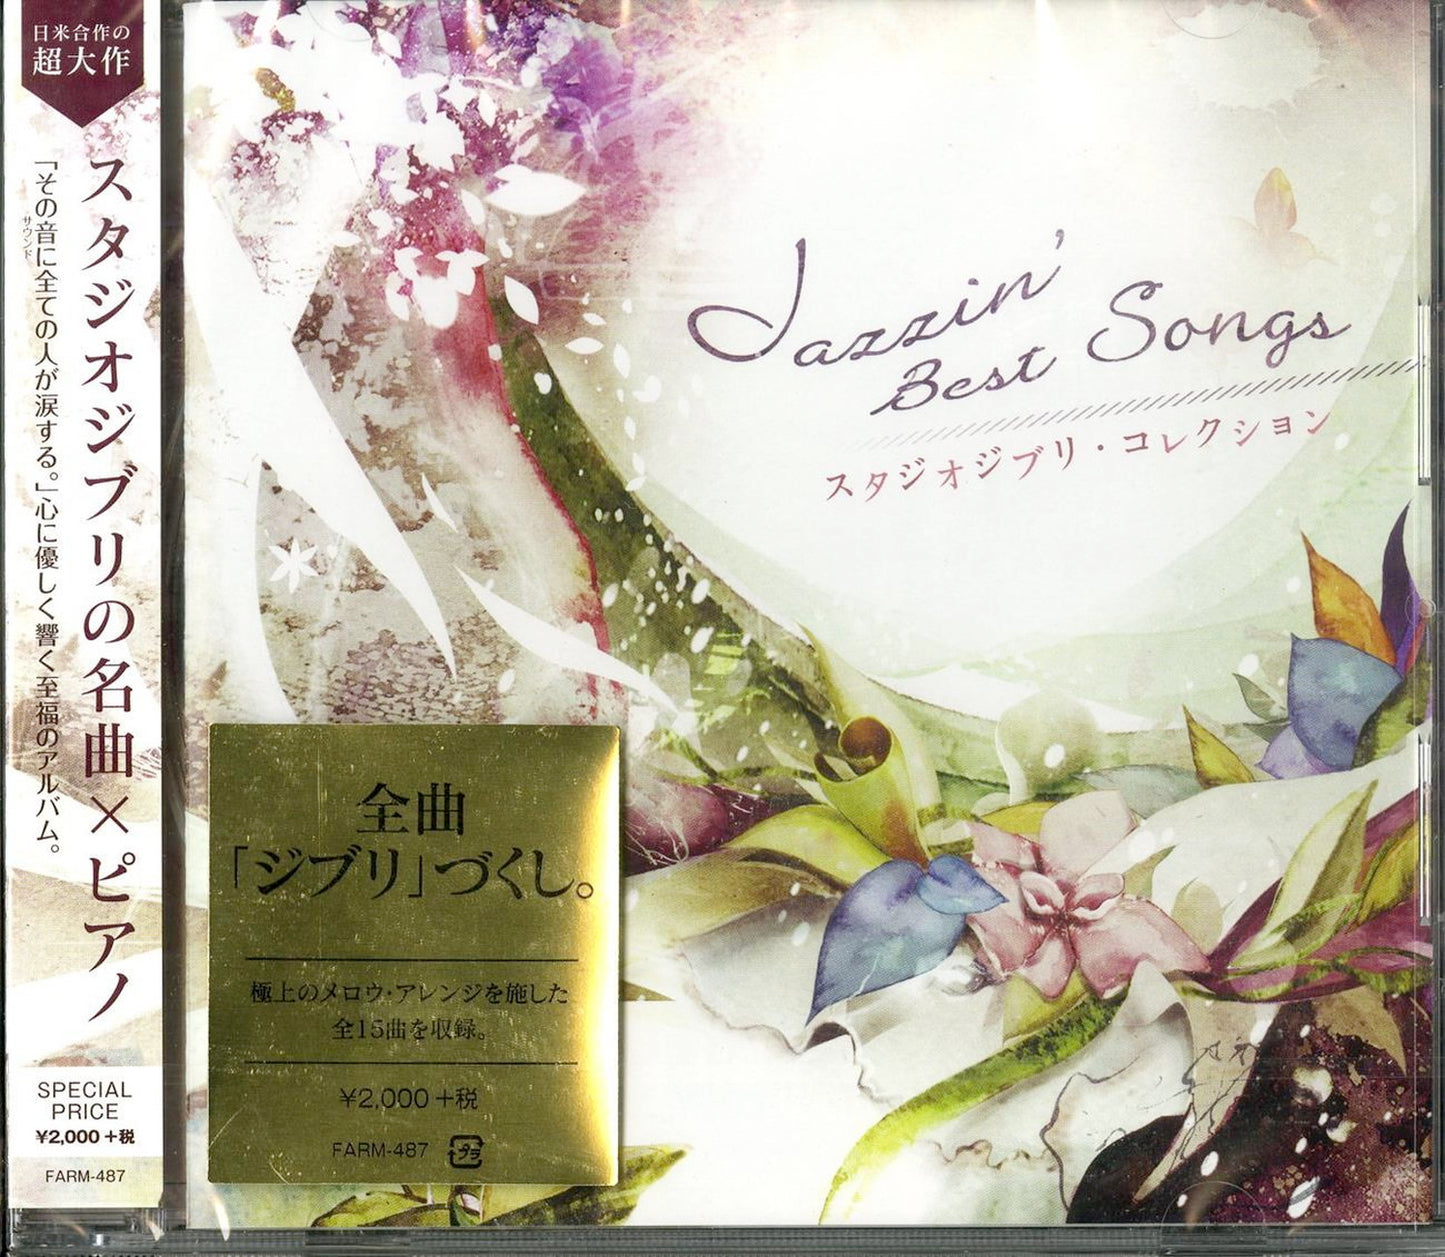 V.A - Jazzin' Best Songs-Studio Ghibli Collection - - Japan  CD